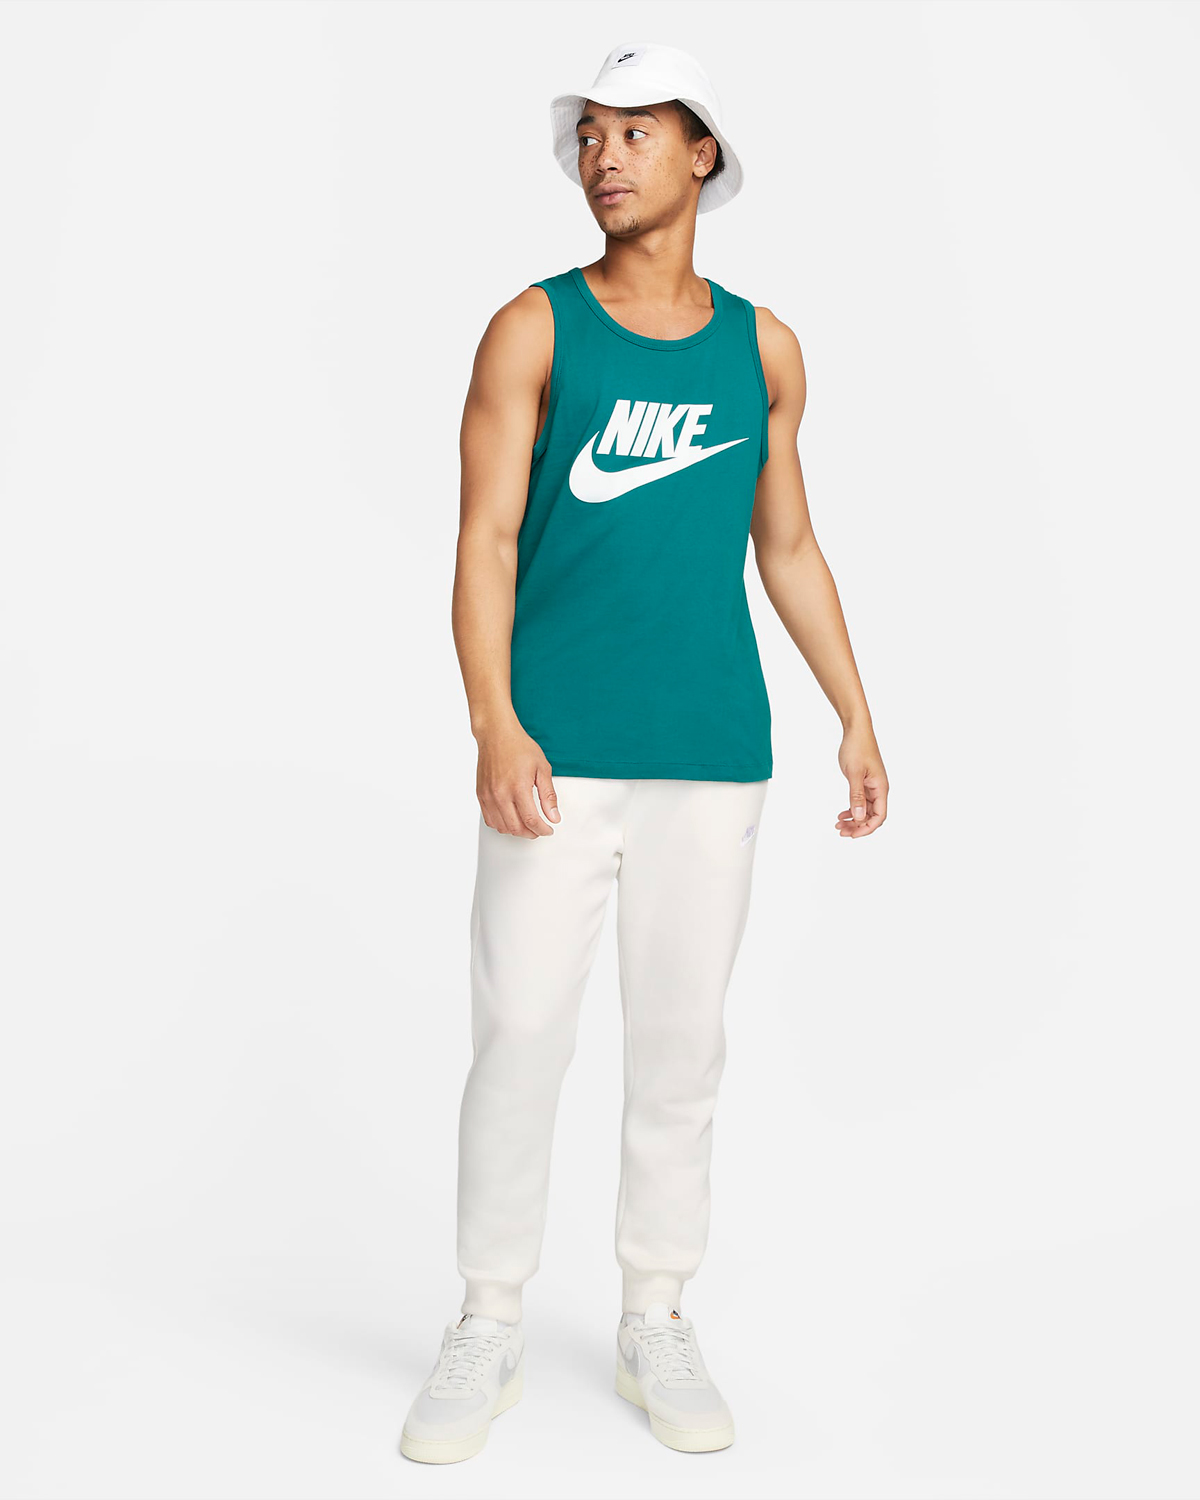 Nike-Sportswear-Tank-Top-Geode-Teal-Outfit